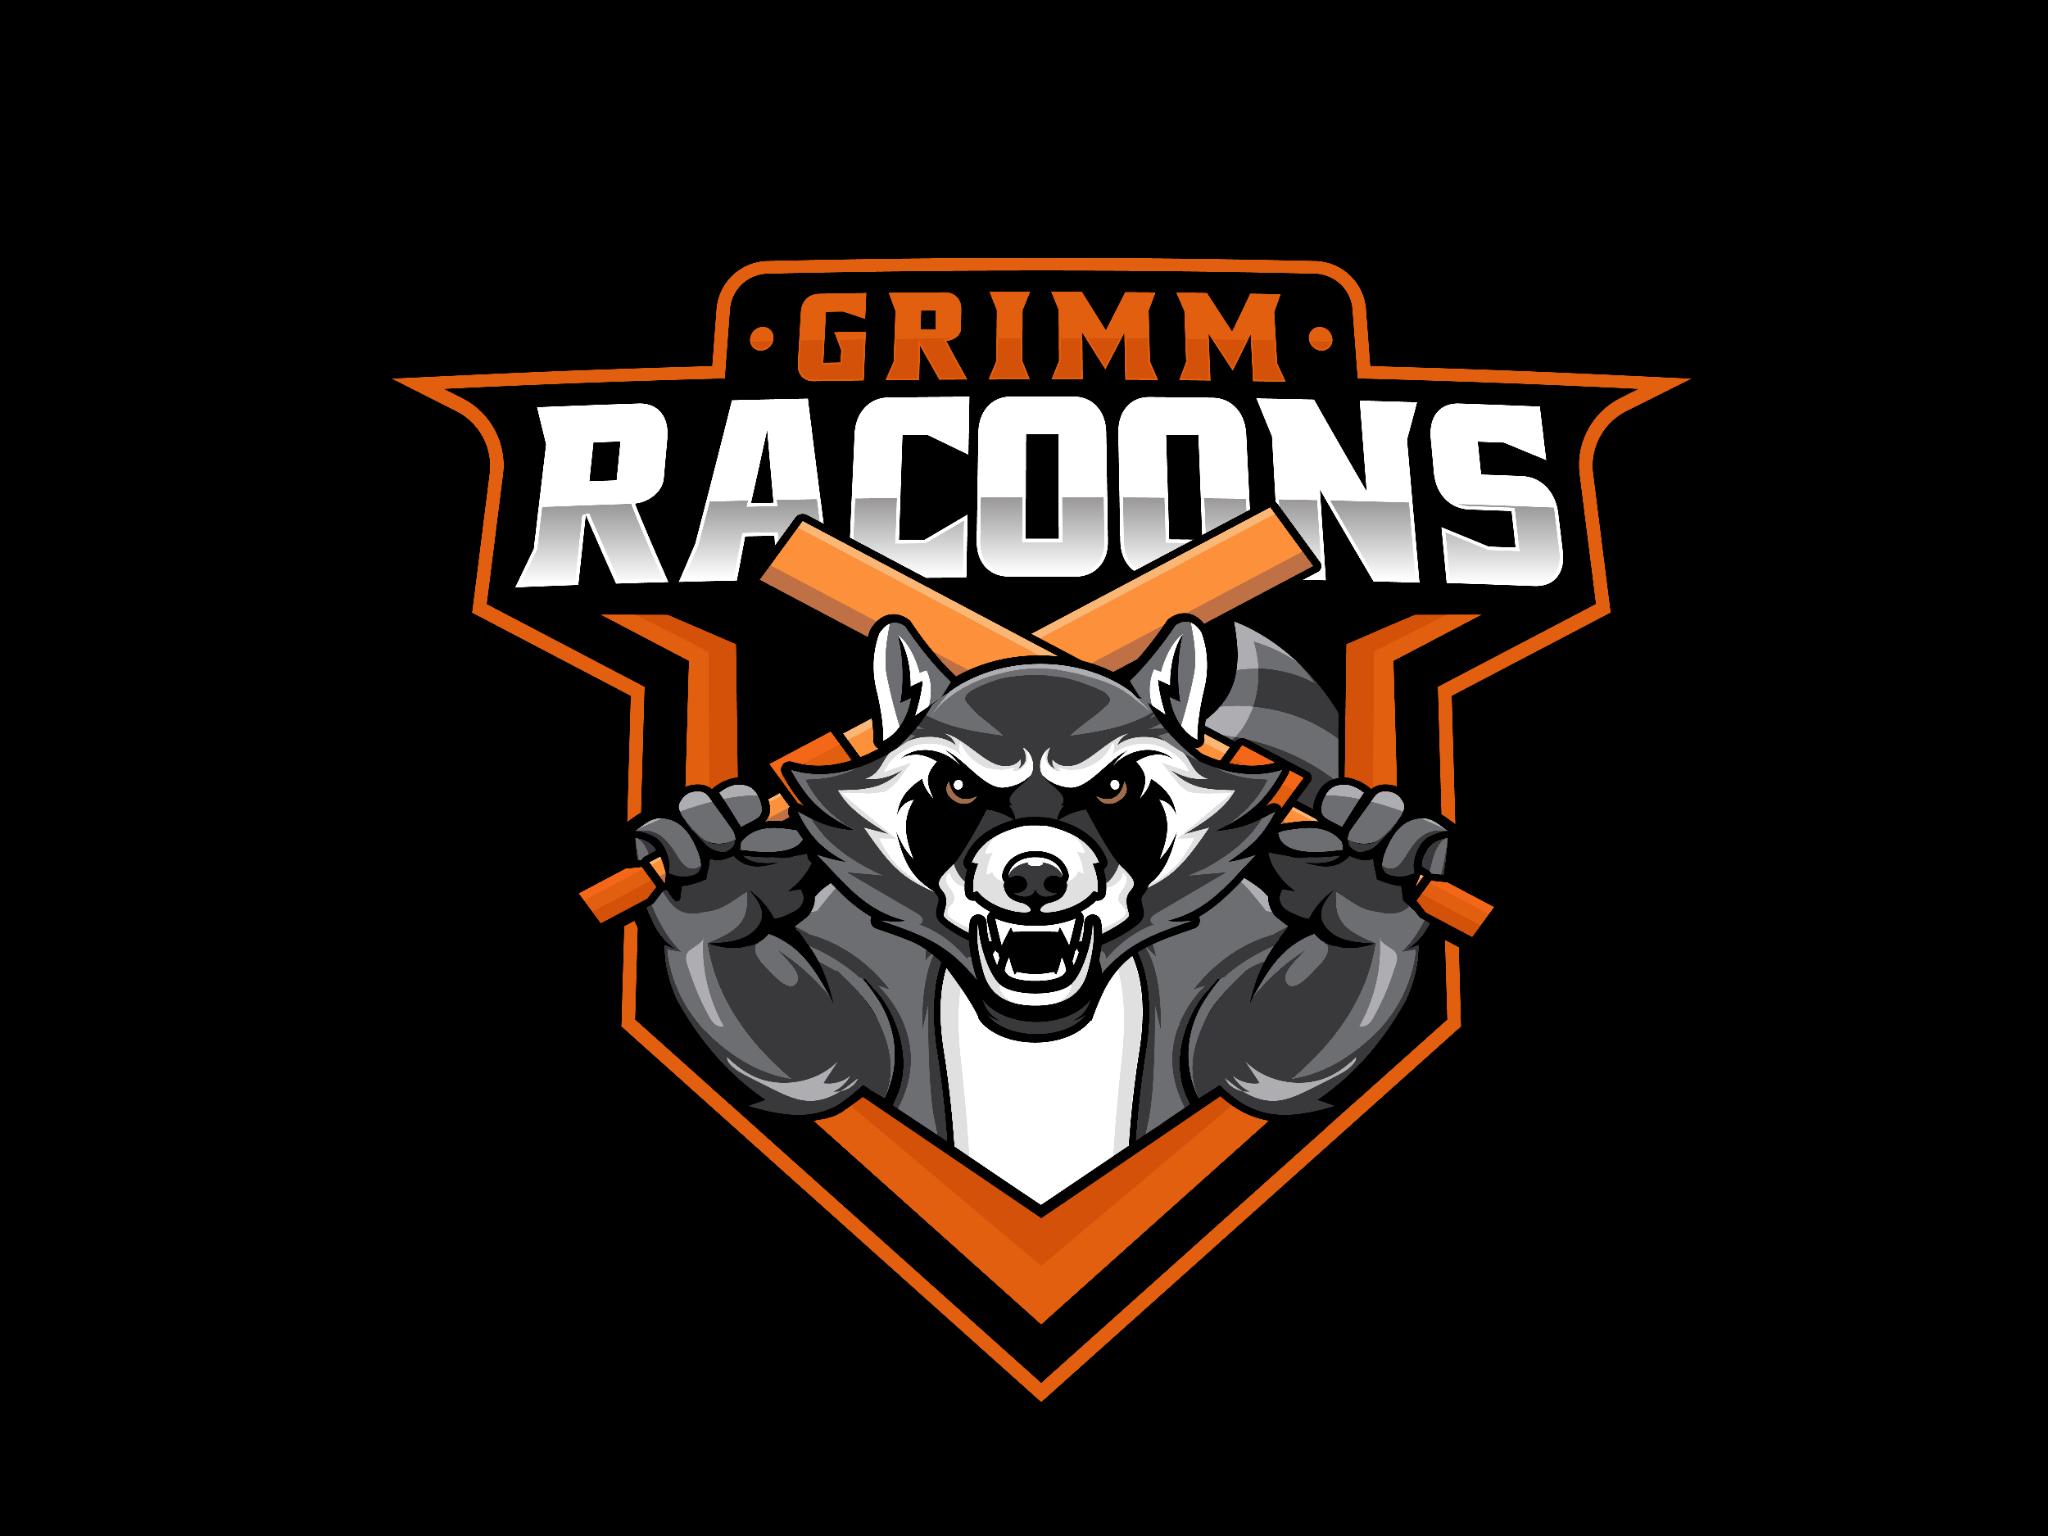 Grimm Racoons